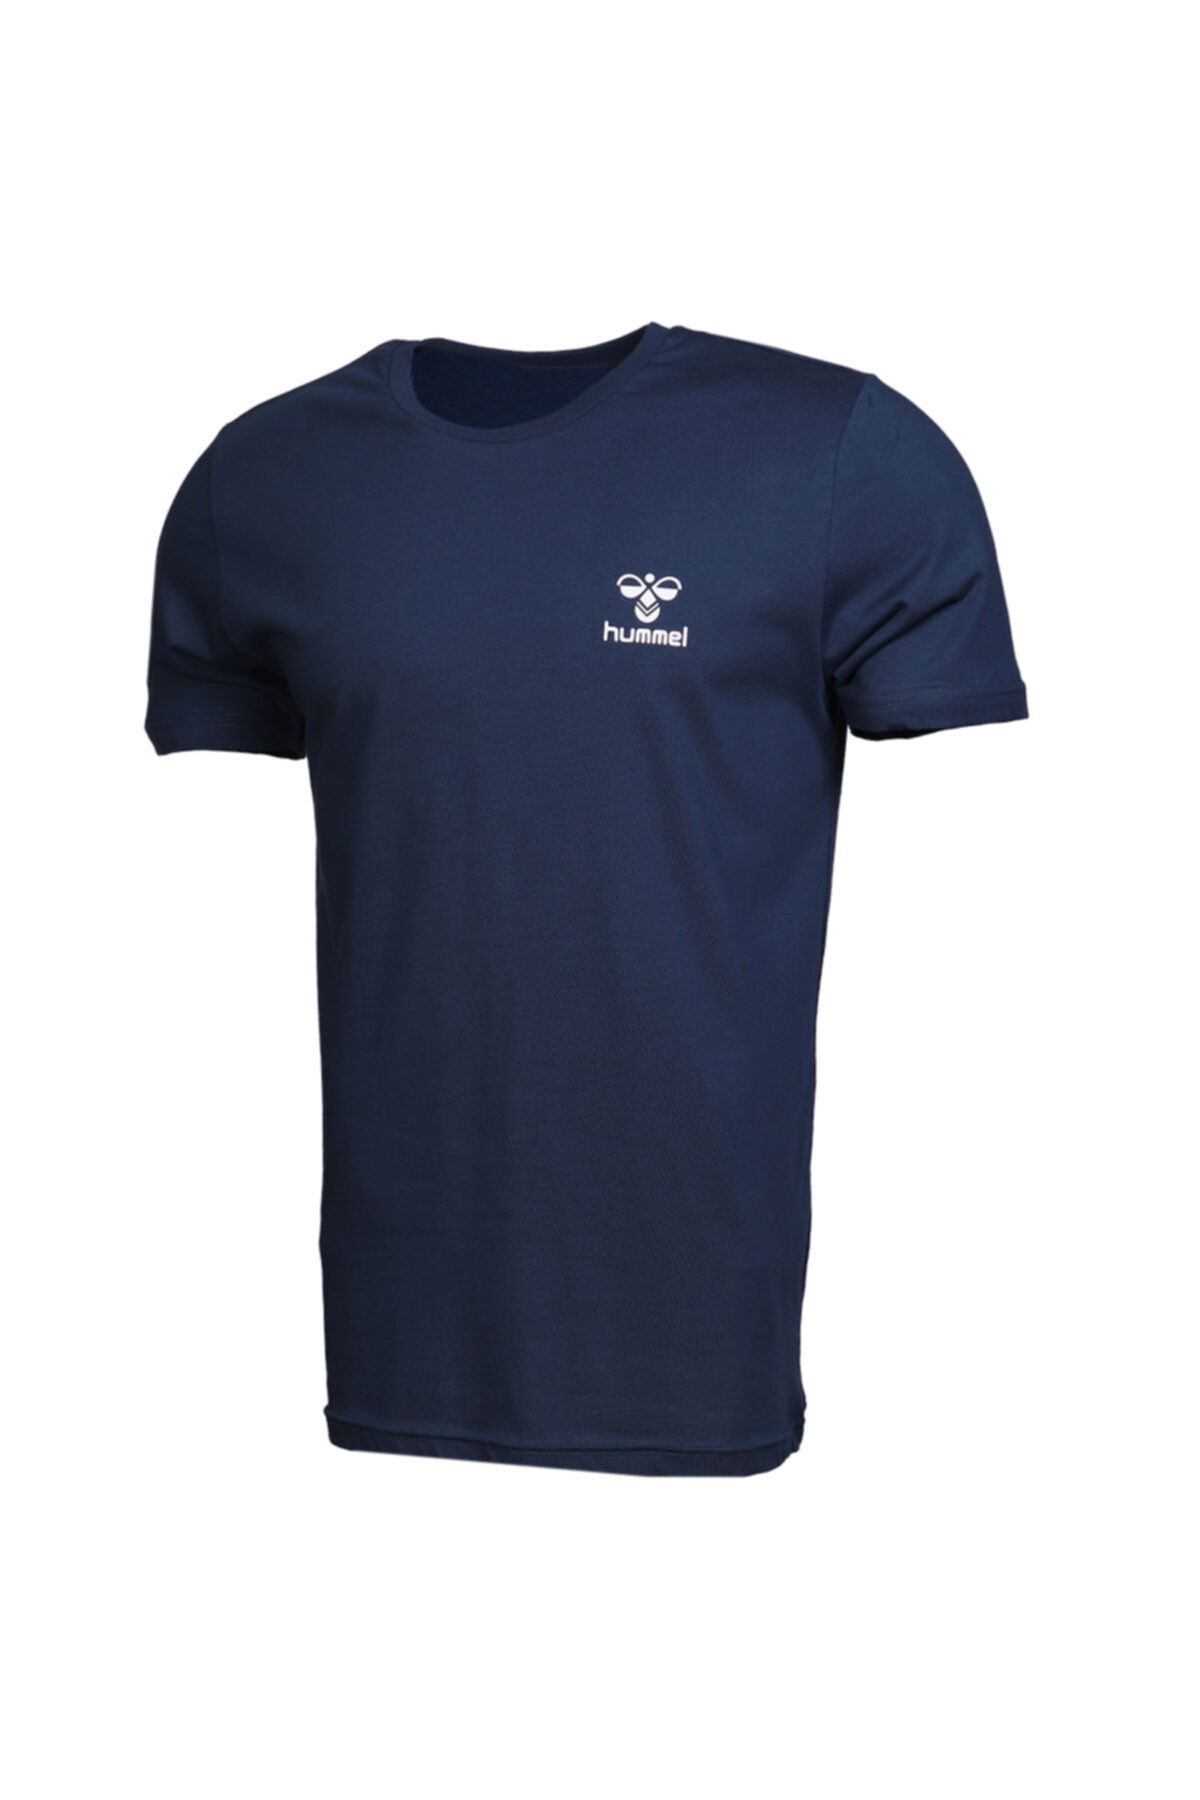 HUMMEL Sports T-Shirt - blue - Fitted - Trendyol